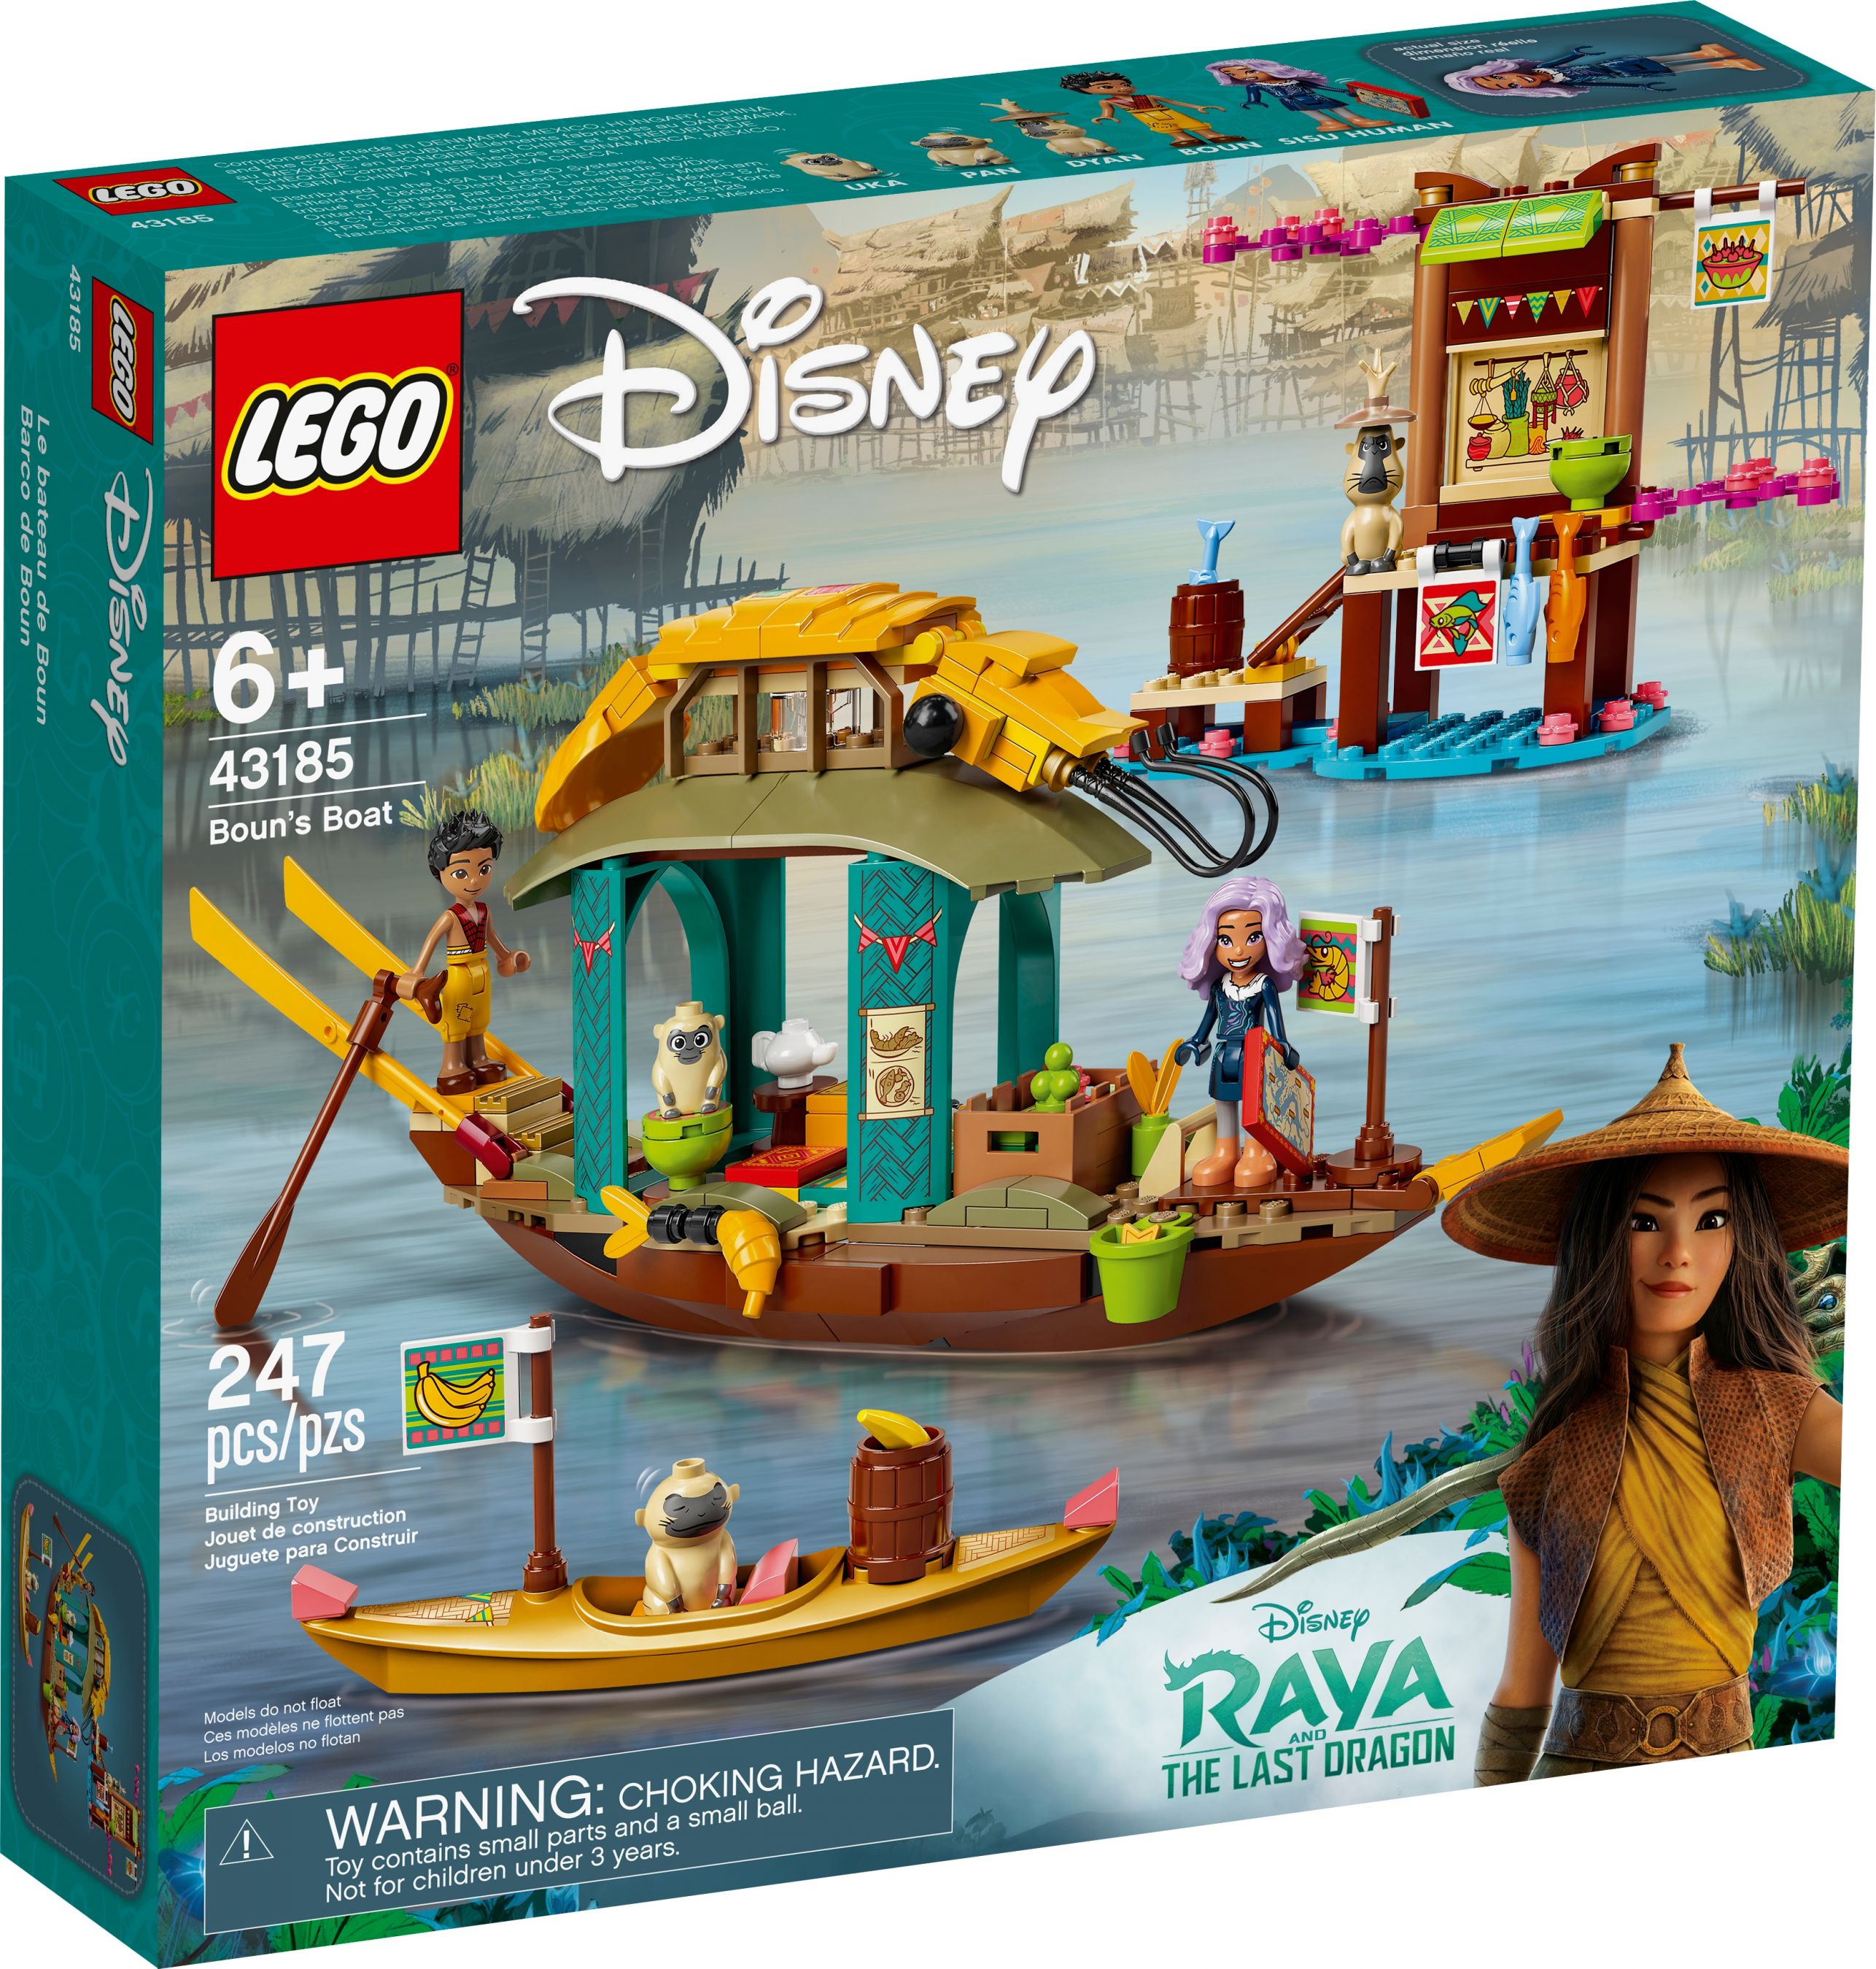 LEGO Disney 43185 Bouns Boot LEGO_43185_box1_v39.jpg